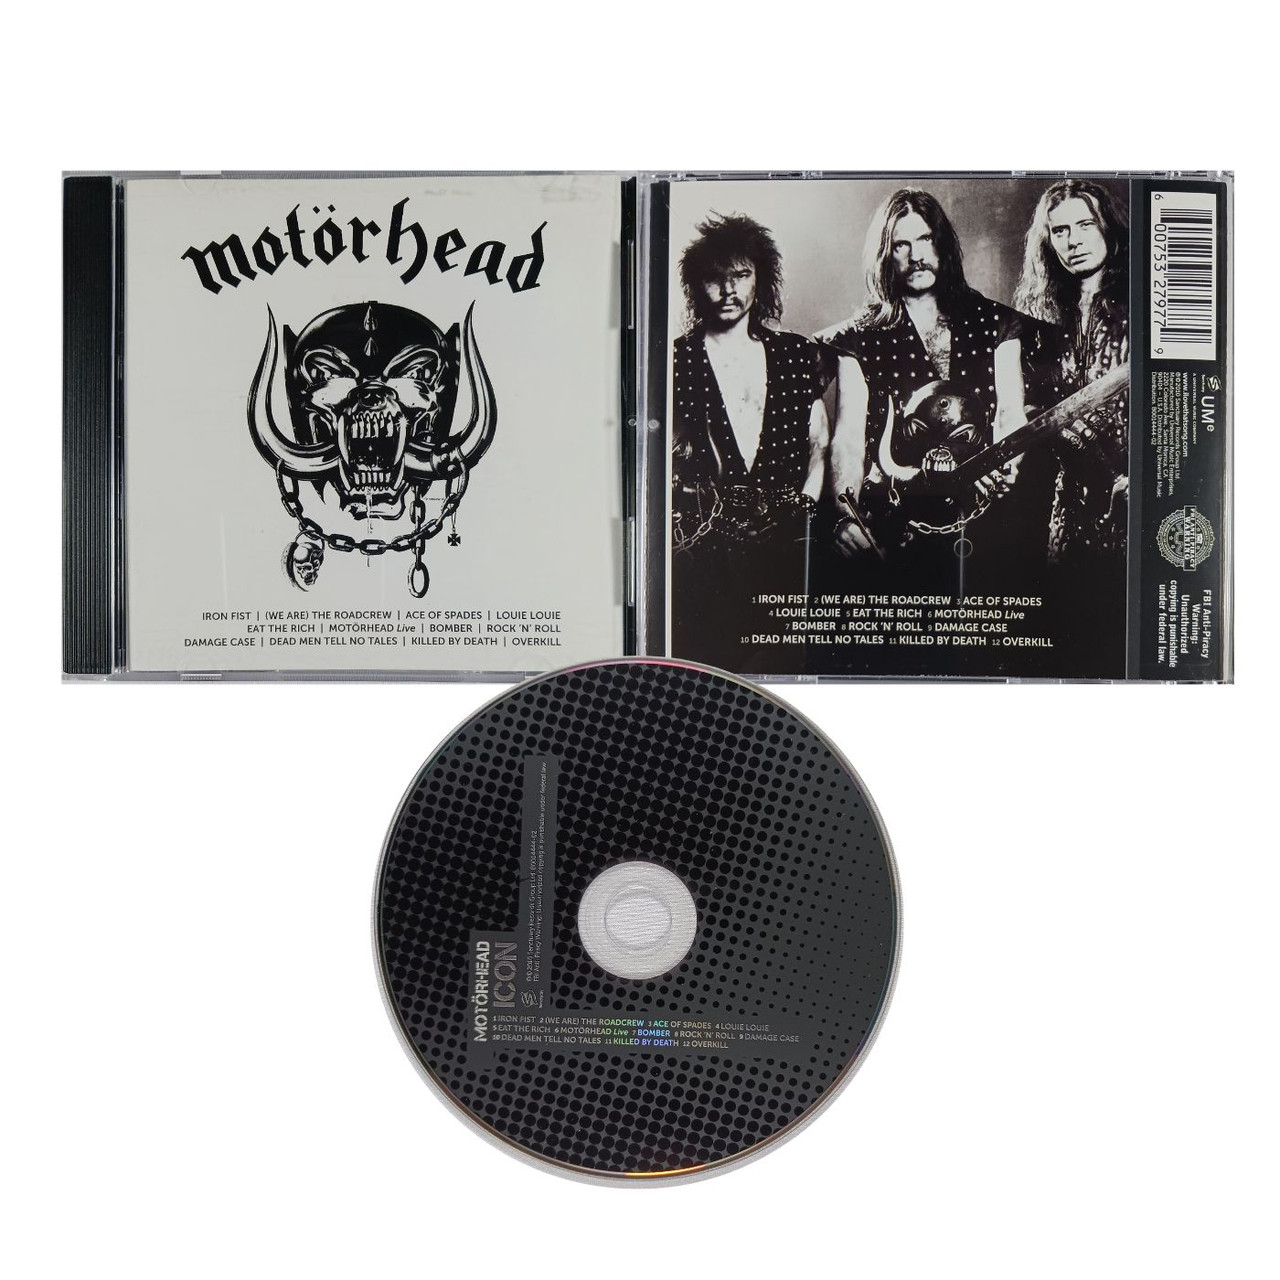 Motörhead – Iron Fist (Official Video) 